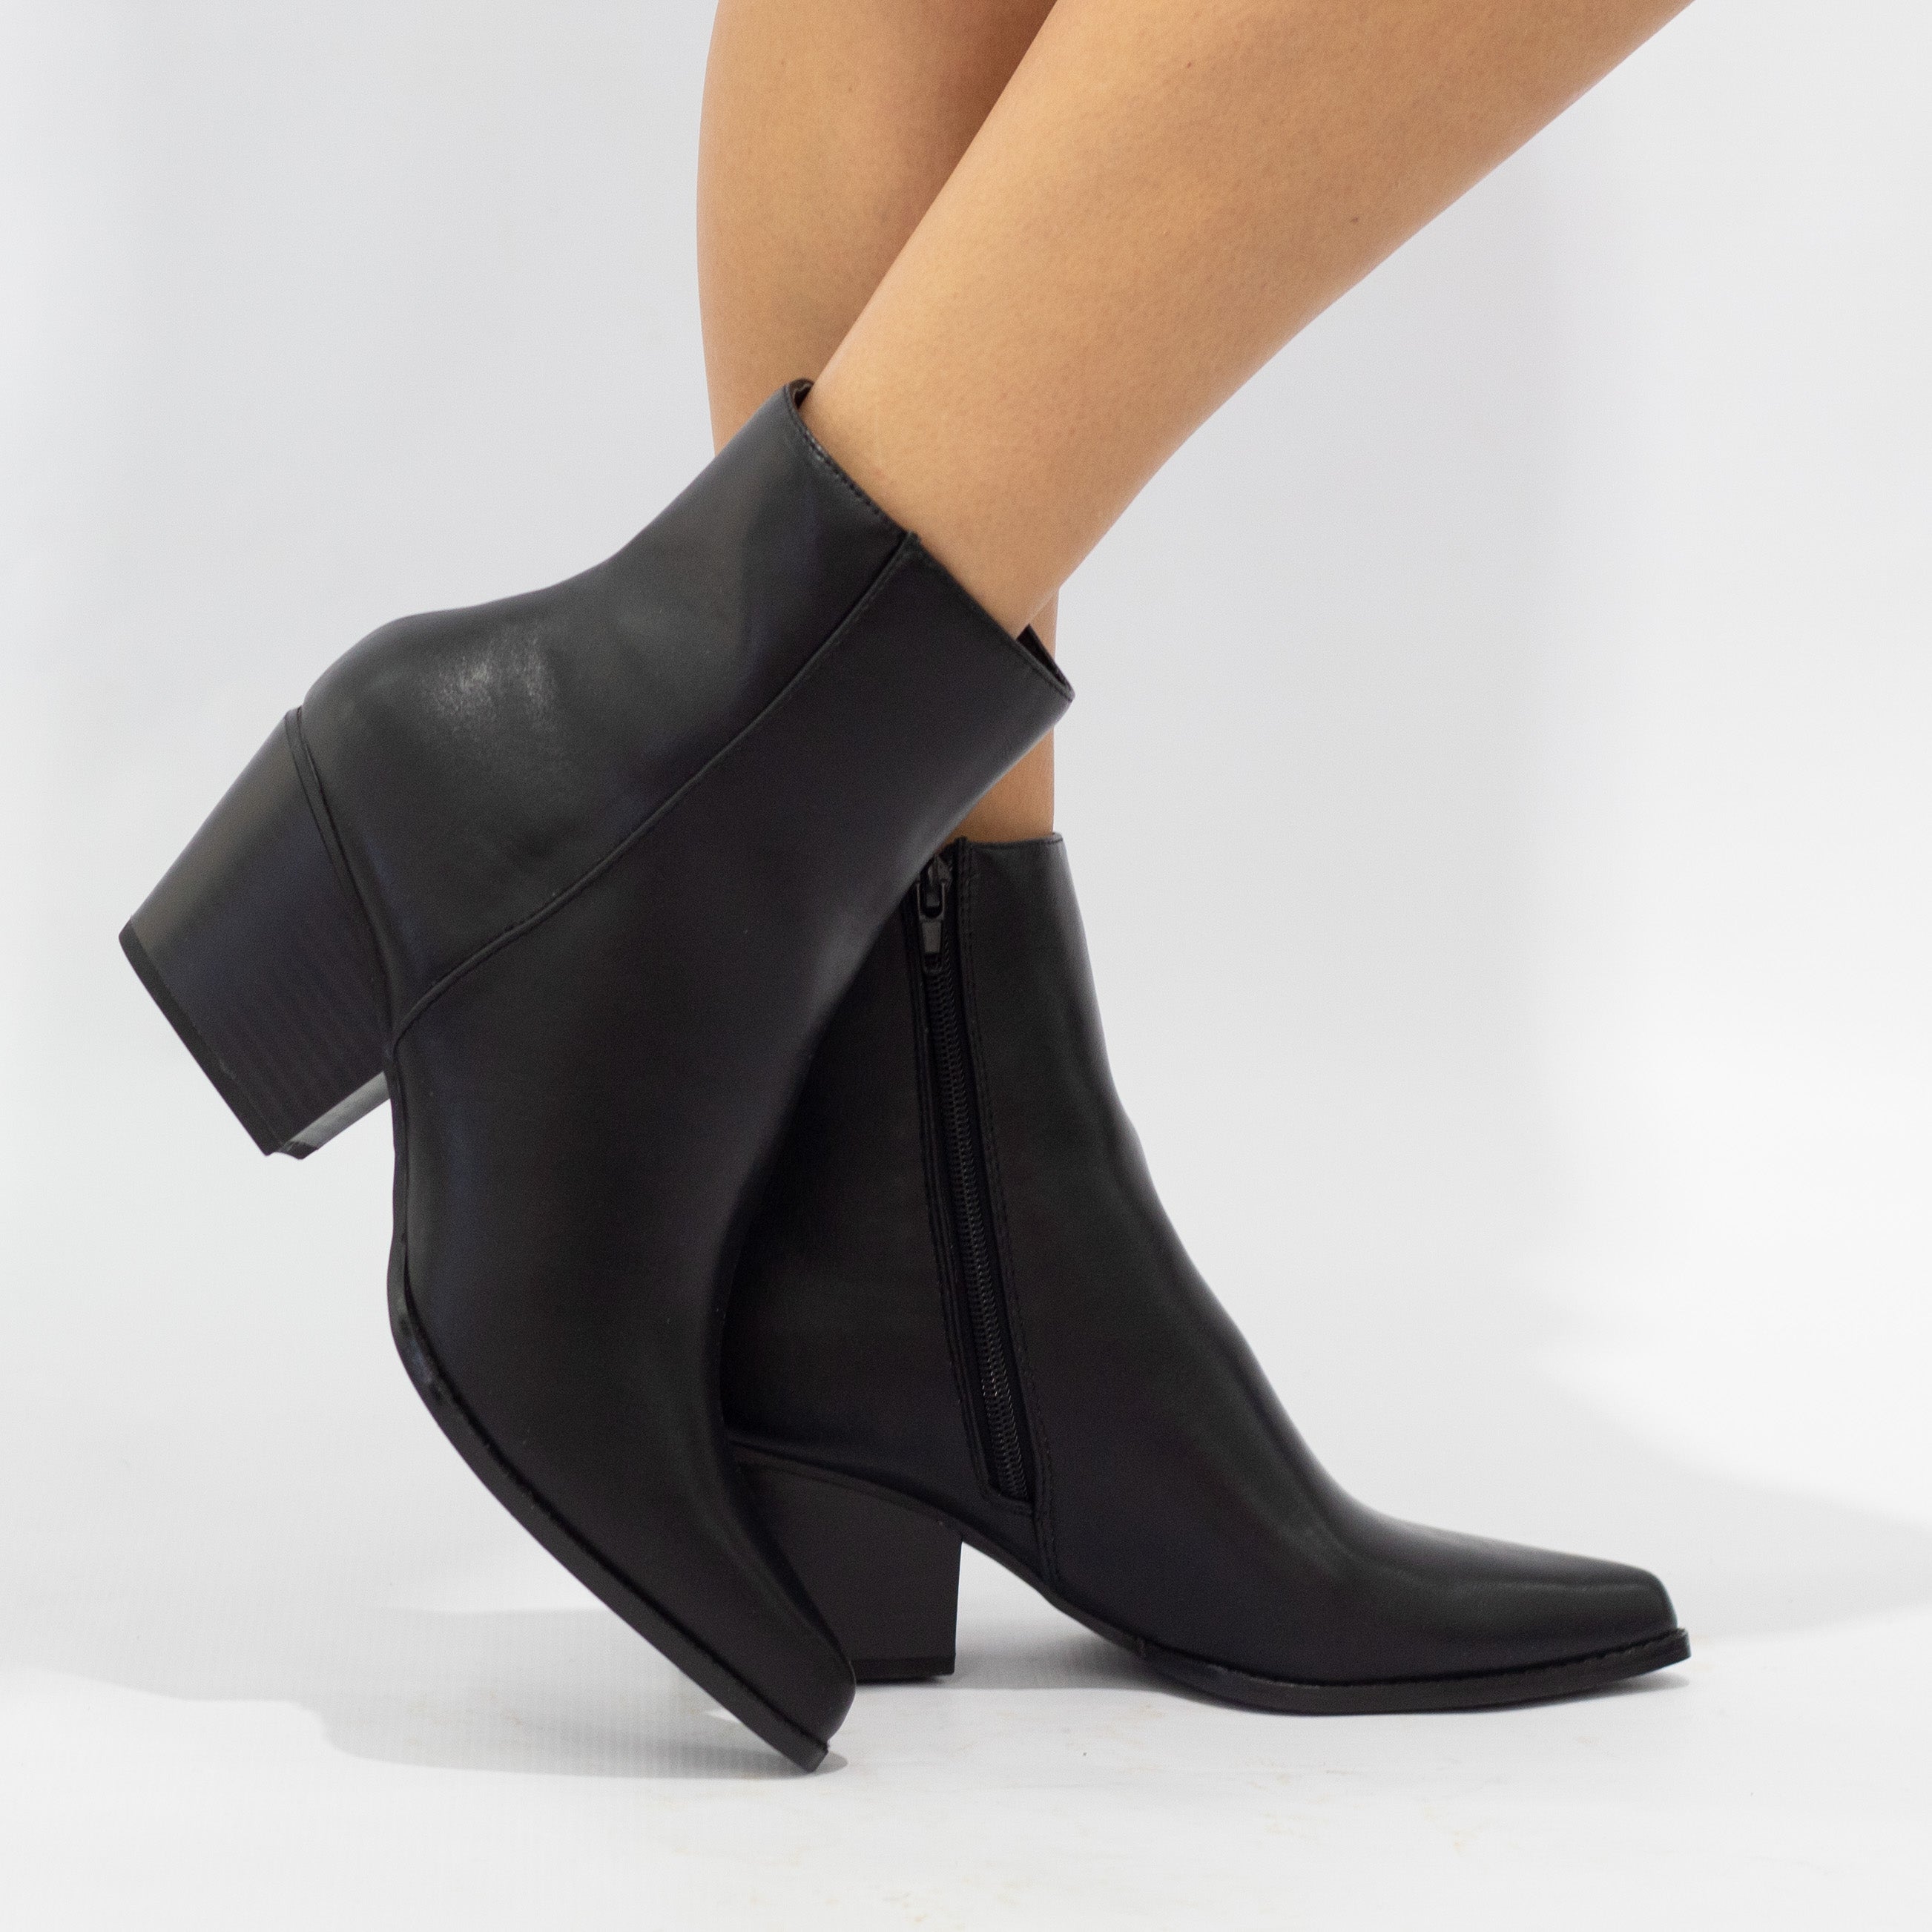 Black 6cm block heel LA08-18 PU ankle boot noelle